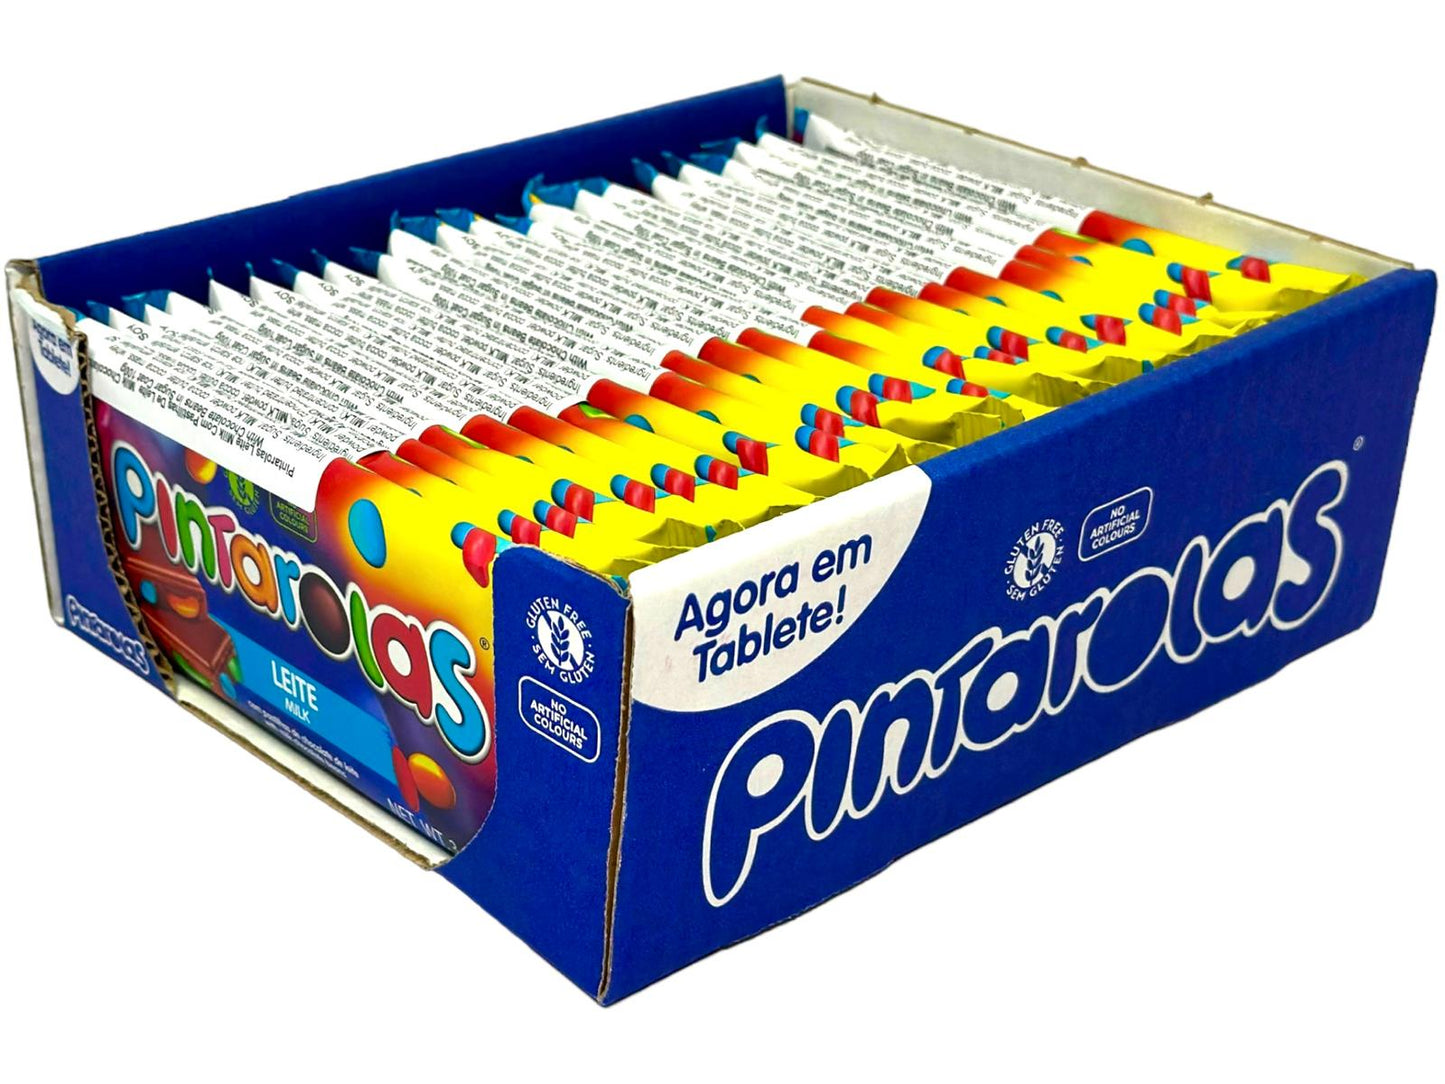 Pintarolas Milk Chocolate Bar with Chocolate Coated Beans 22 x 100g 2200g total